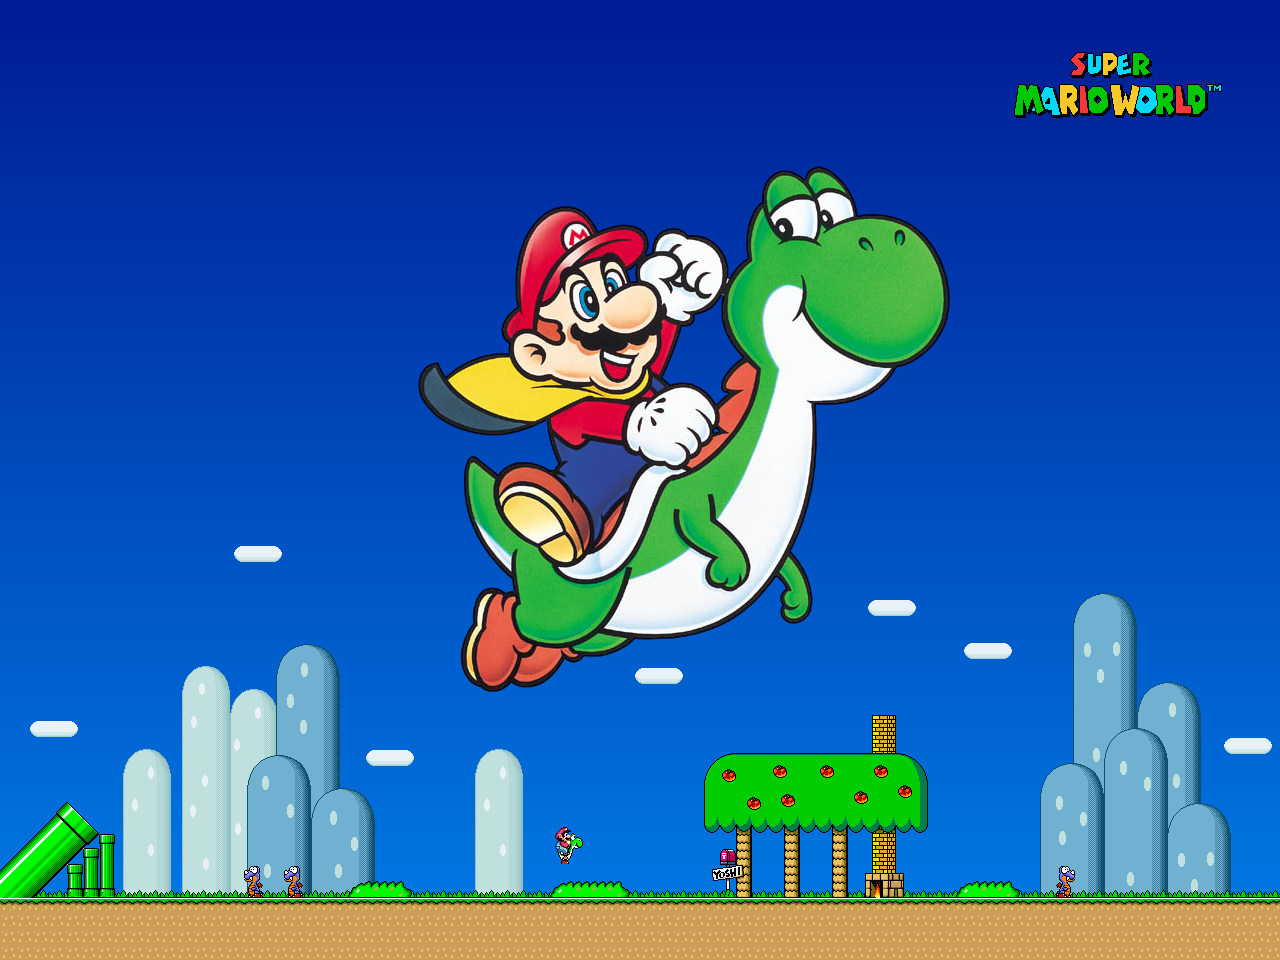 Super Mario World HD wallpapers, Desktop wallpaper - most viewed